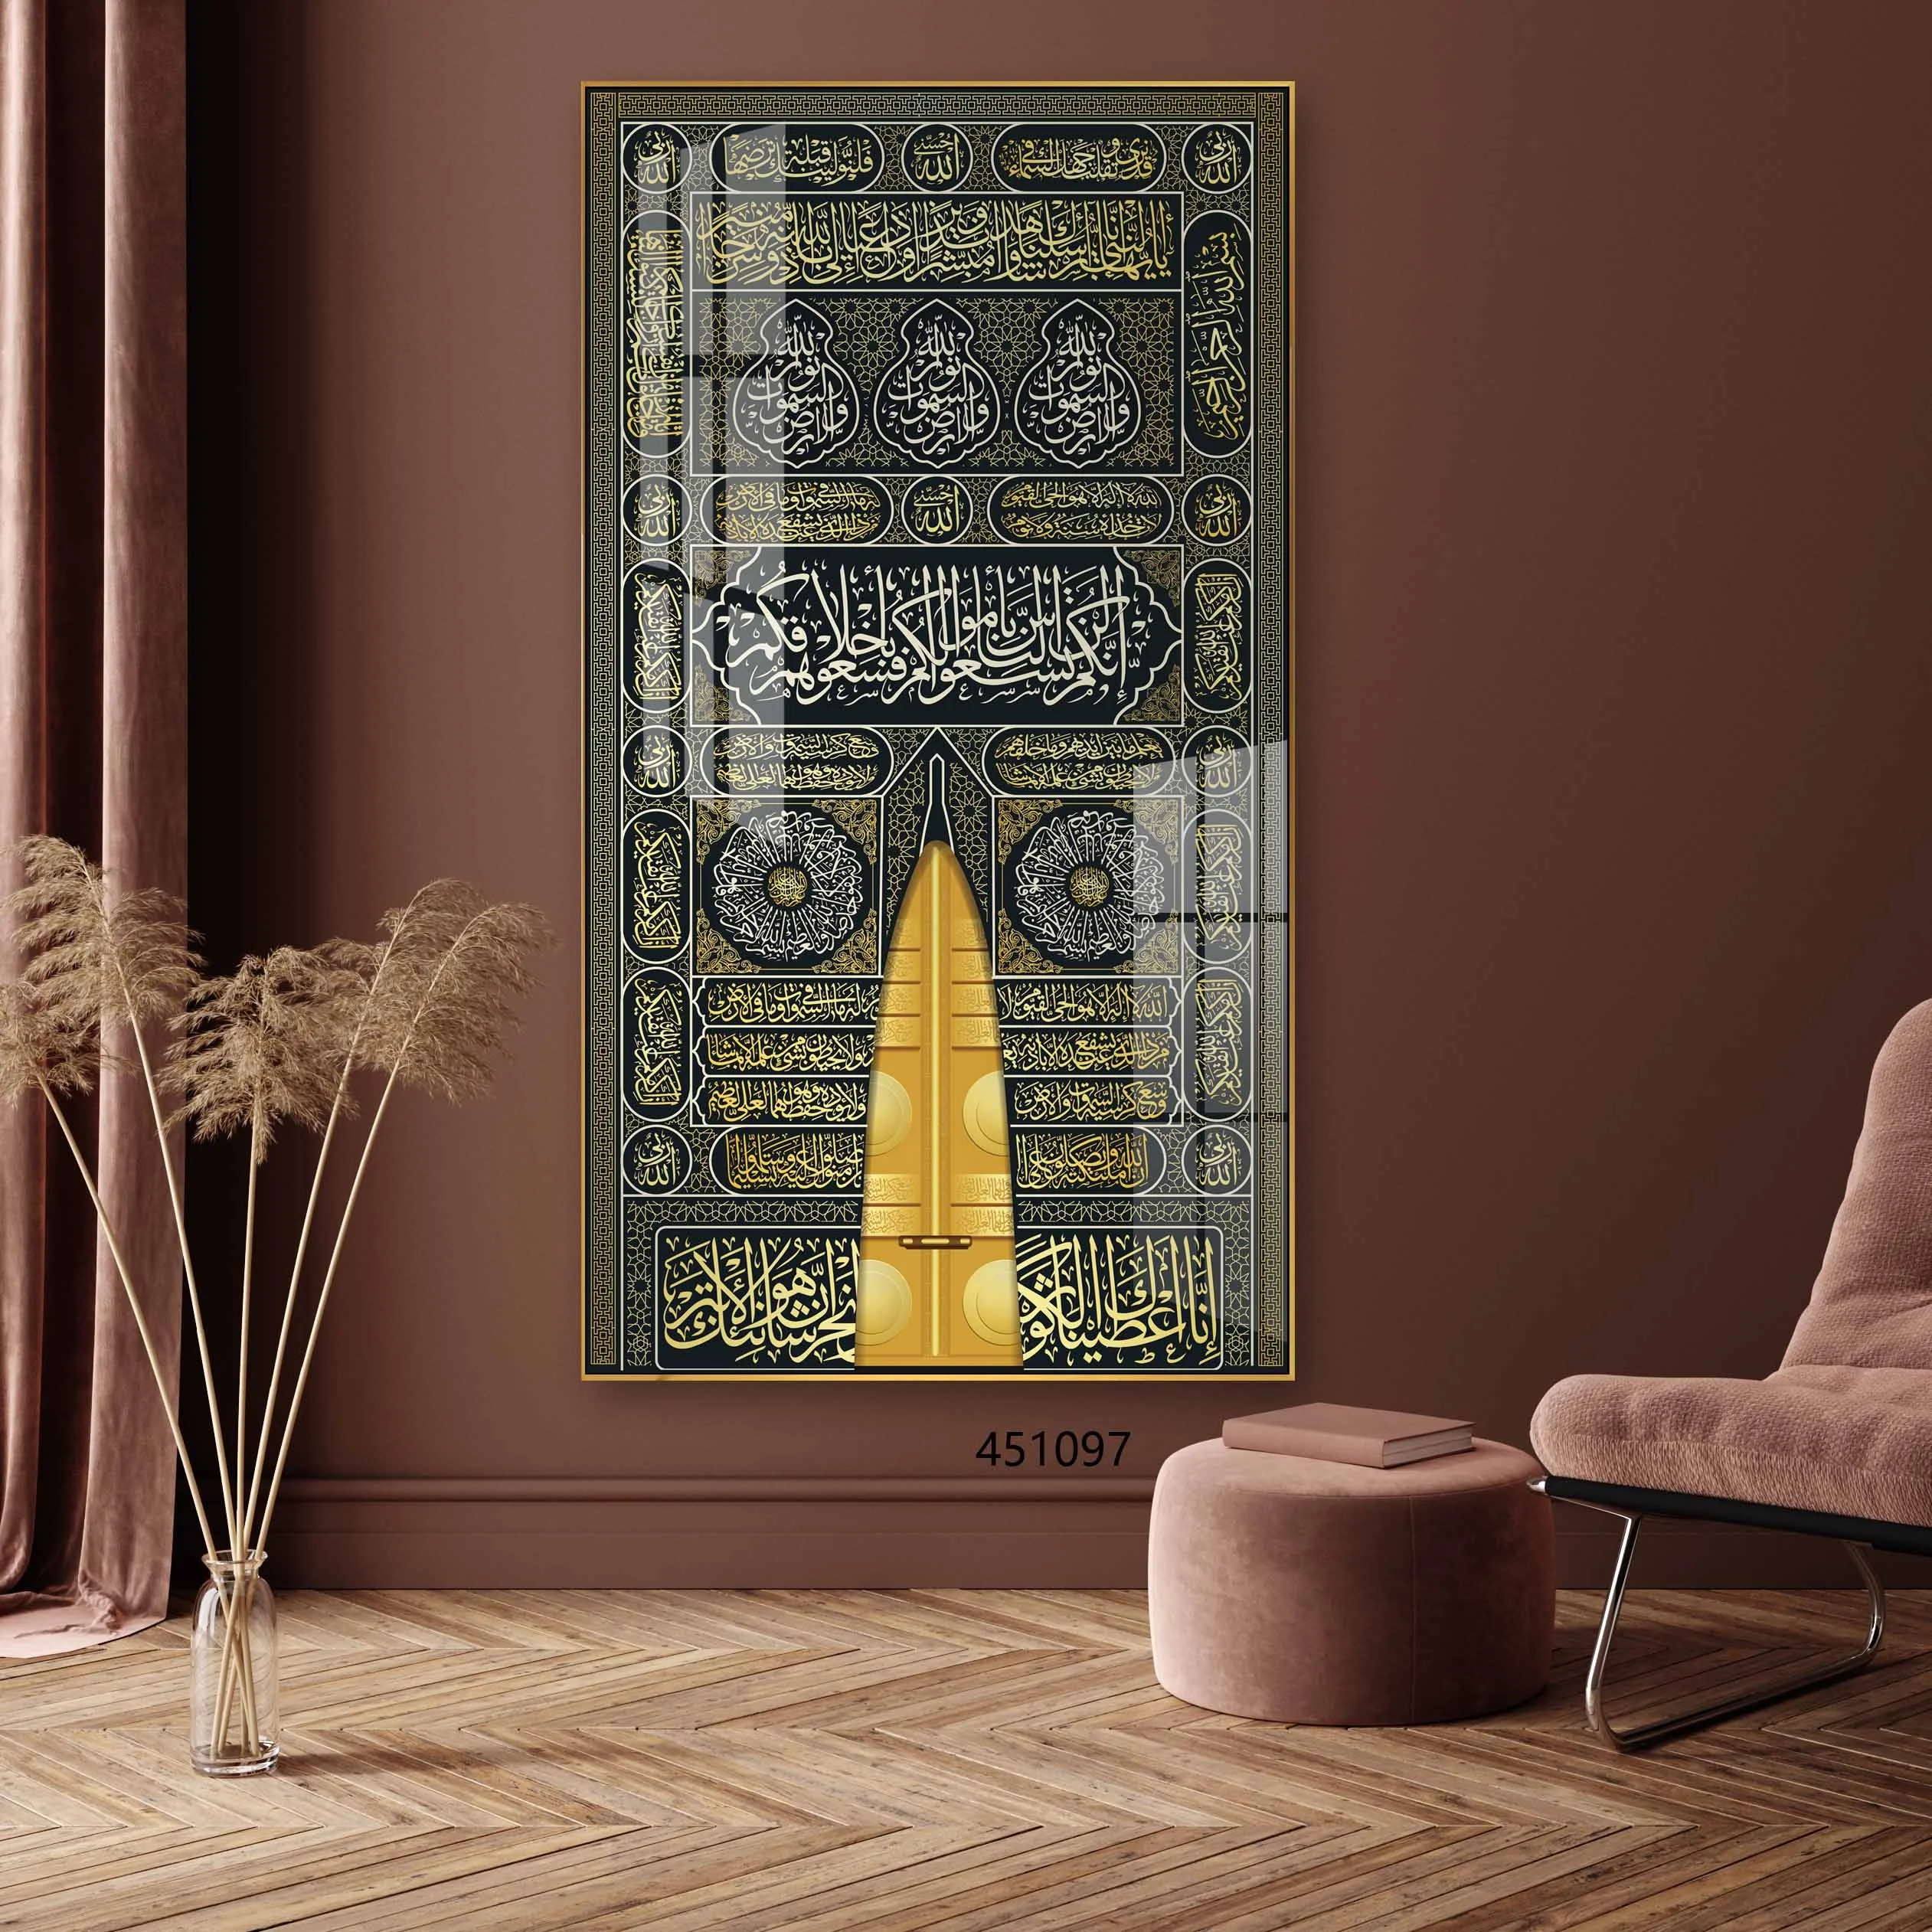 

Muslim Mosque Islamic Wall Decor Ramadan Gifts 2022 Quran Arabic Calligraphy Large Home Living Room Decoration Printing Wall Art